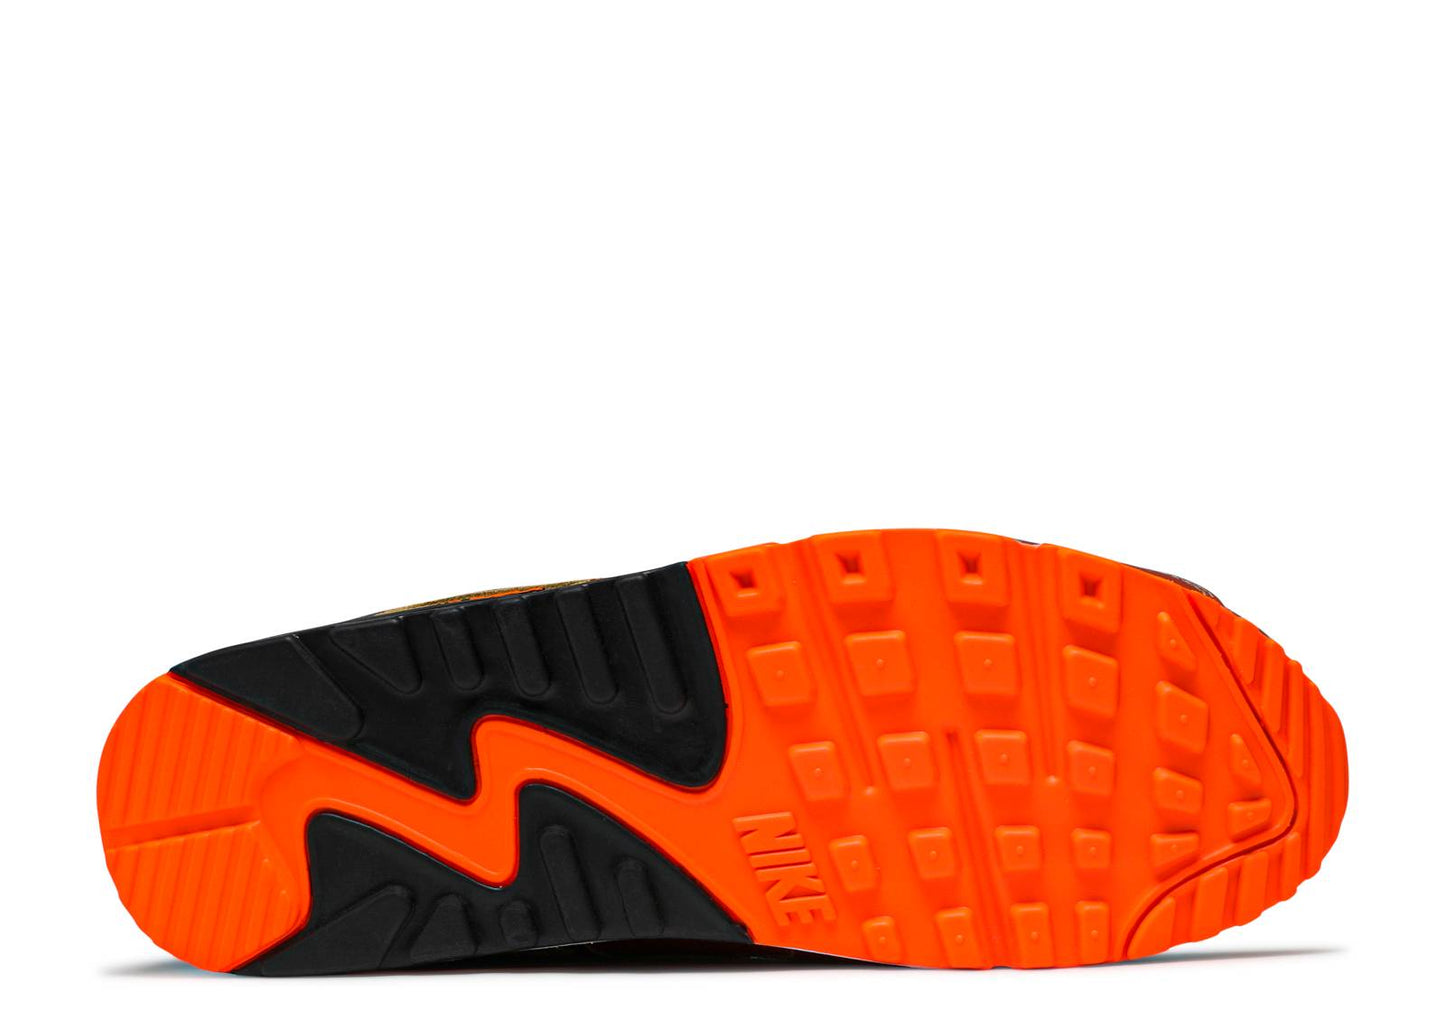 Nike Air Max 90 SP "Orange Duck Camo"